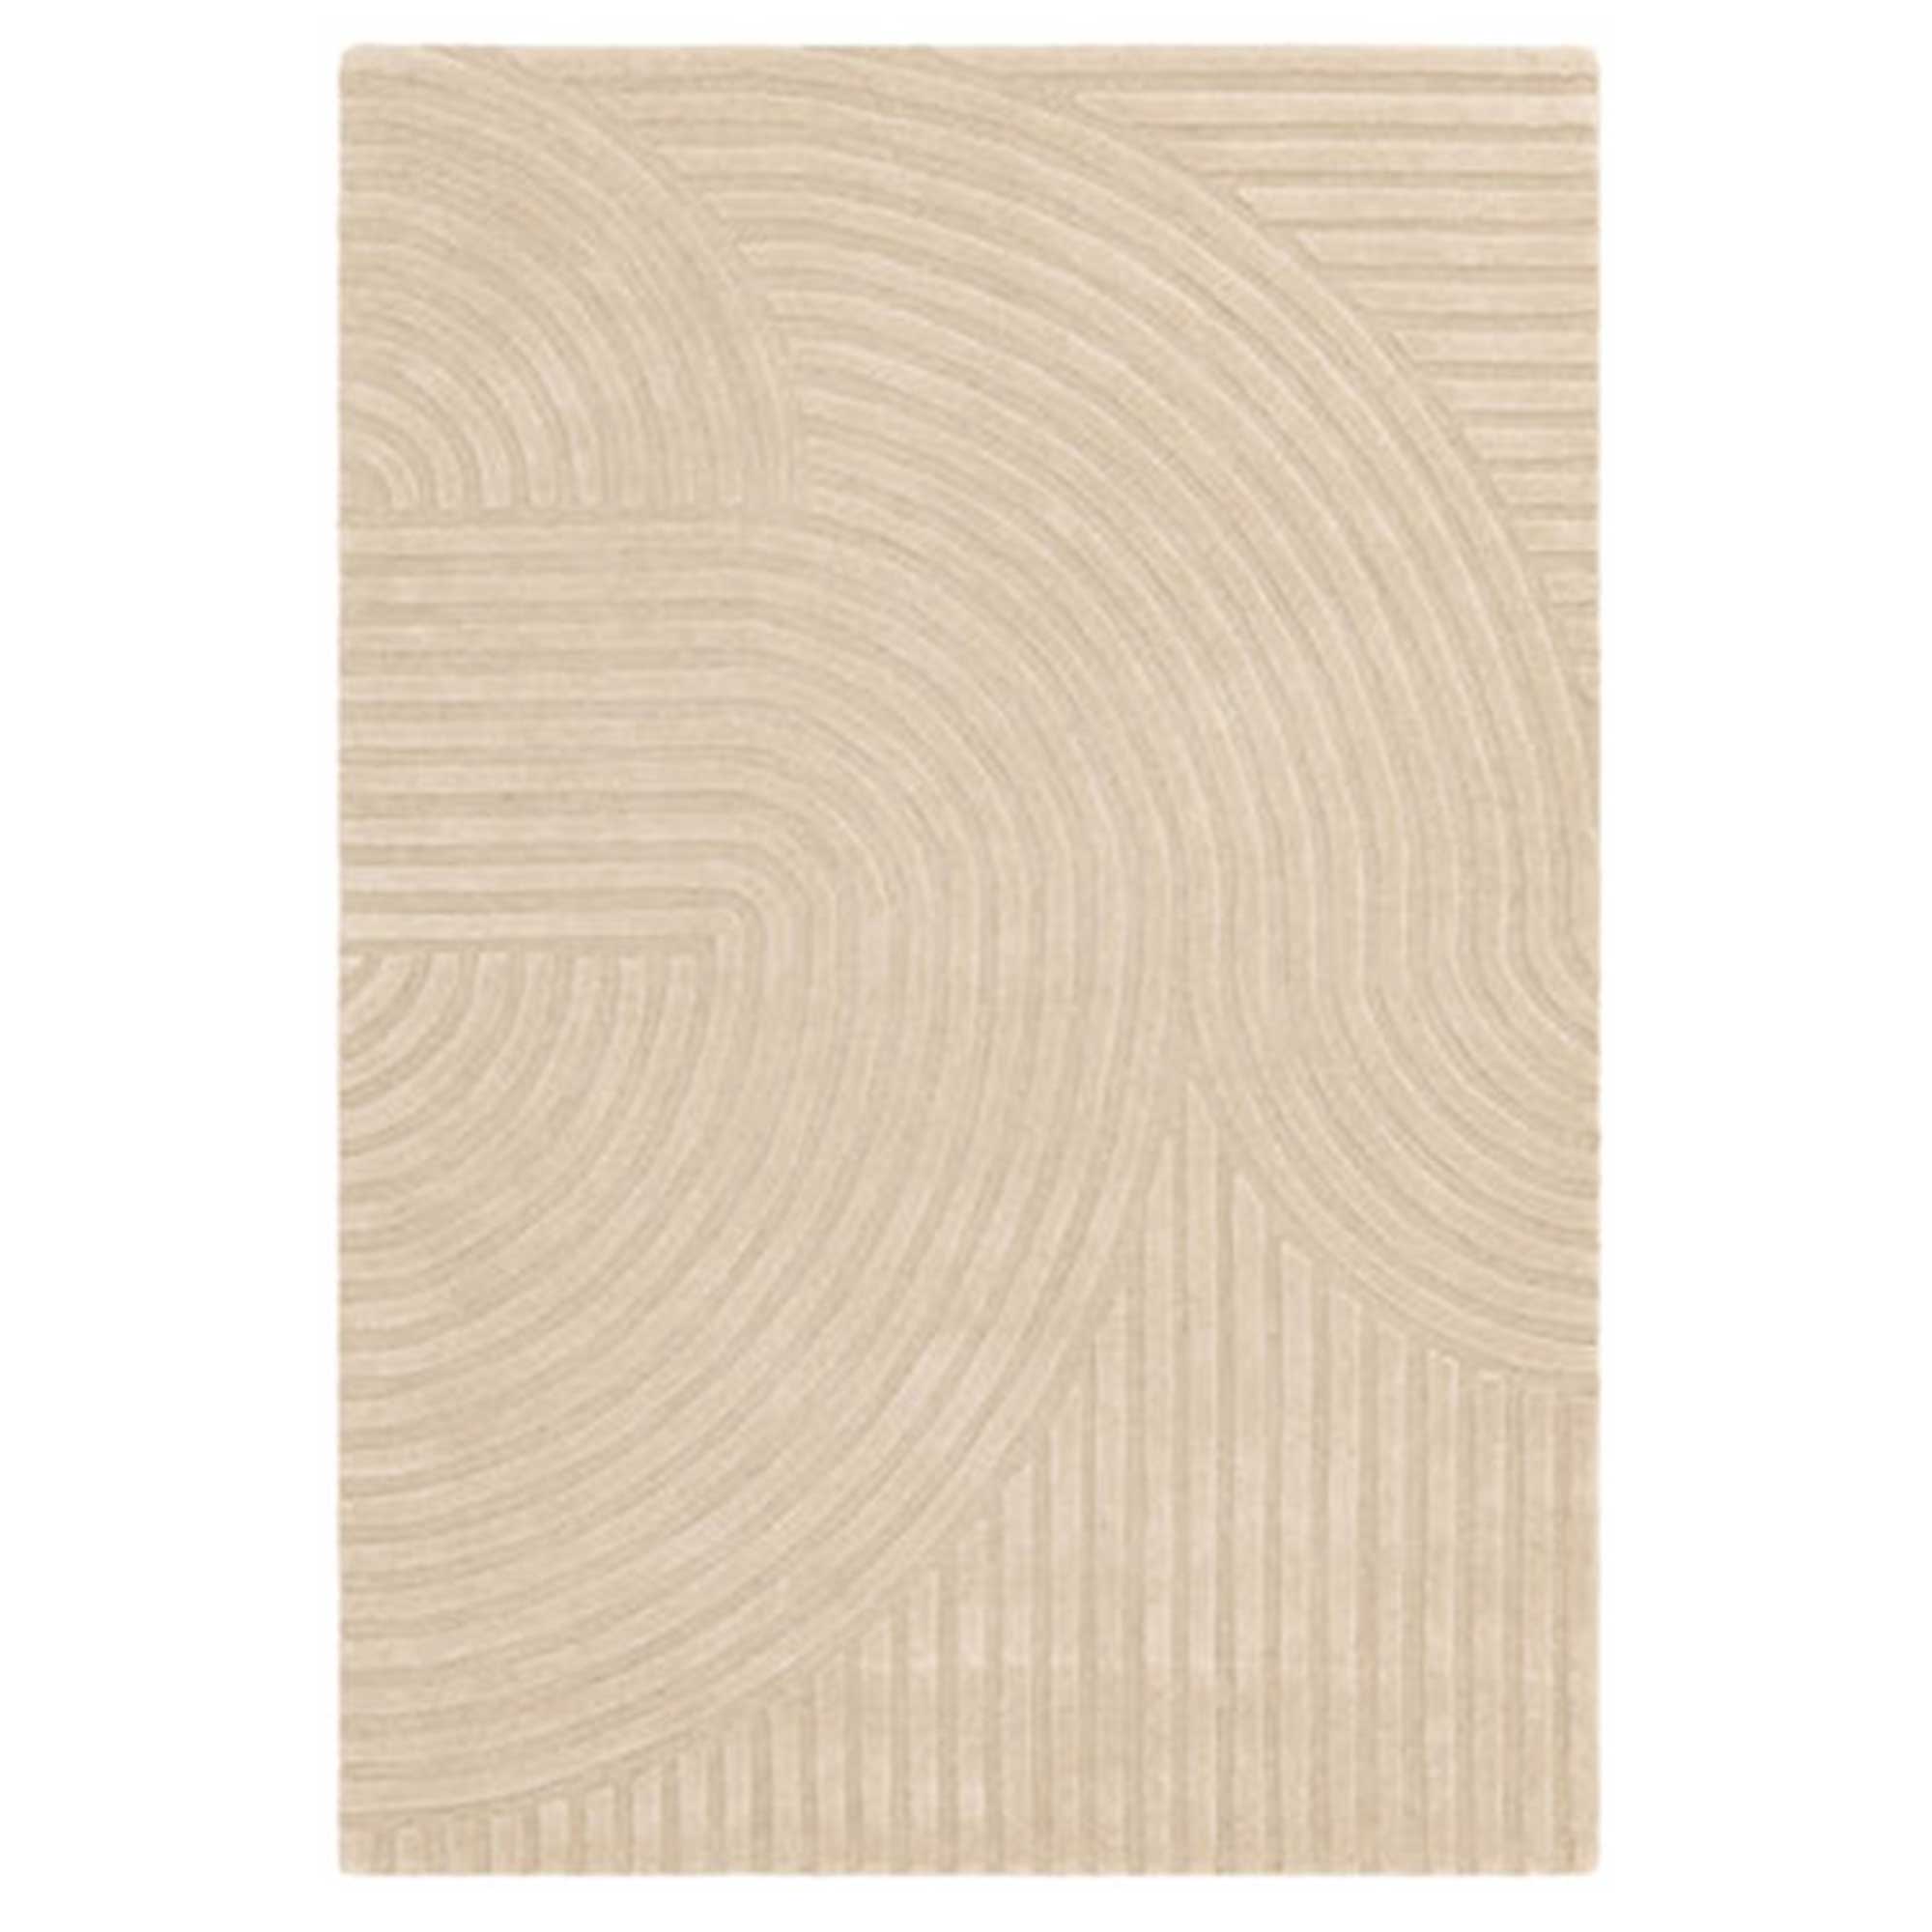 Photo of Curvone sand 160x230cm rug in square in neutral w160cm